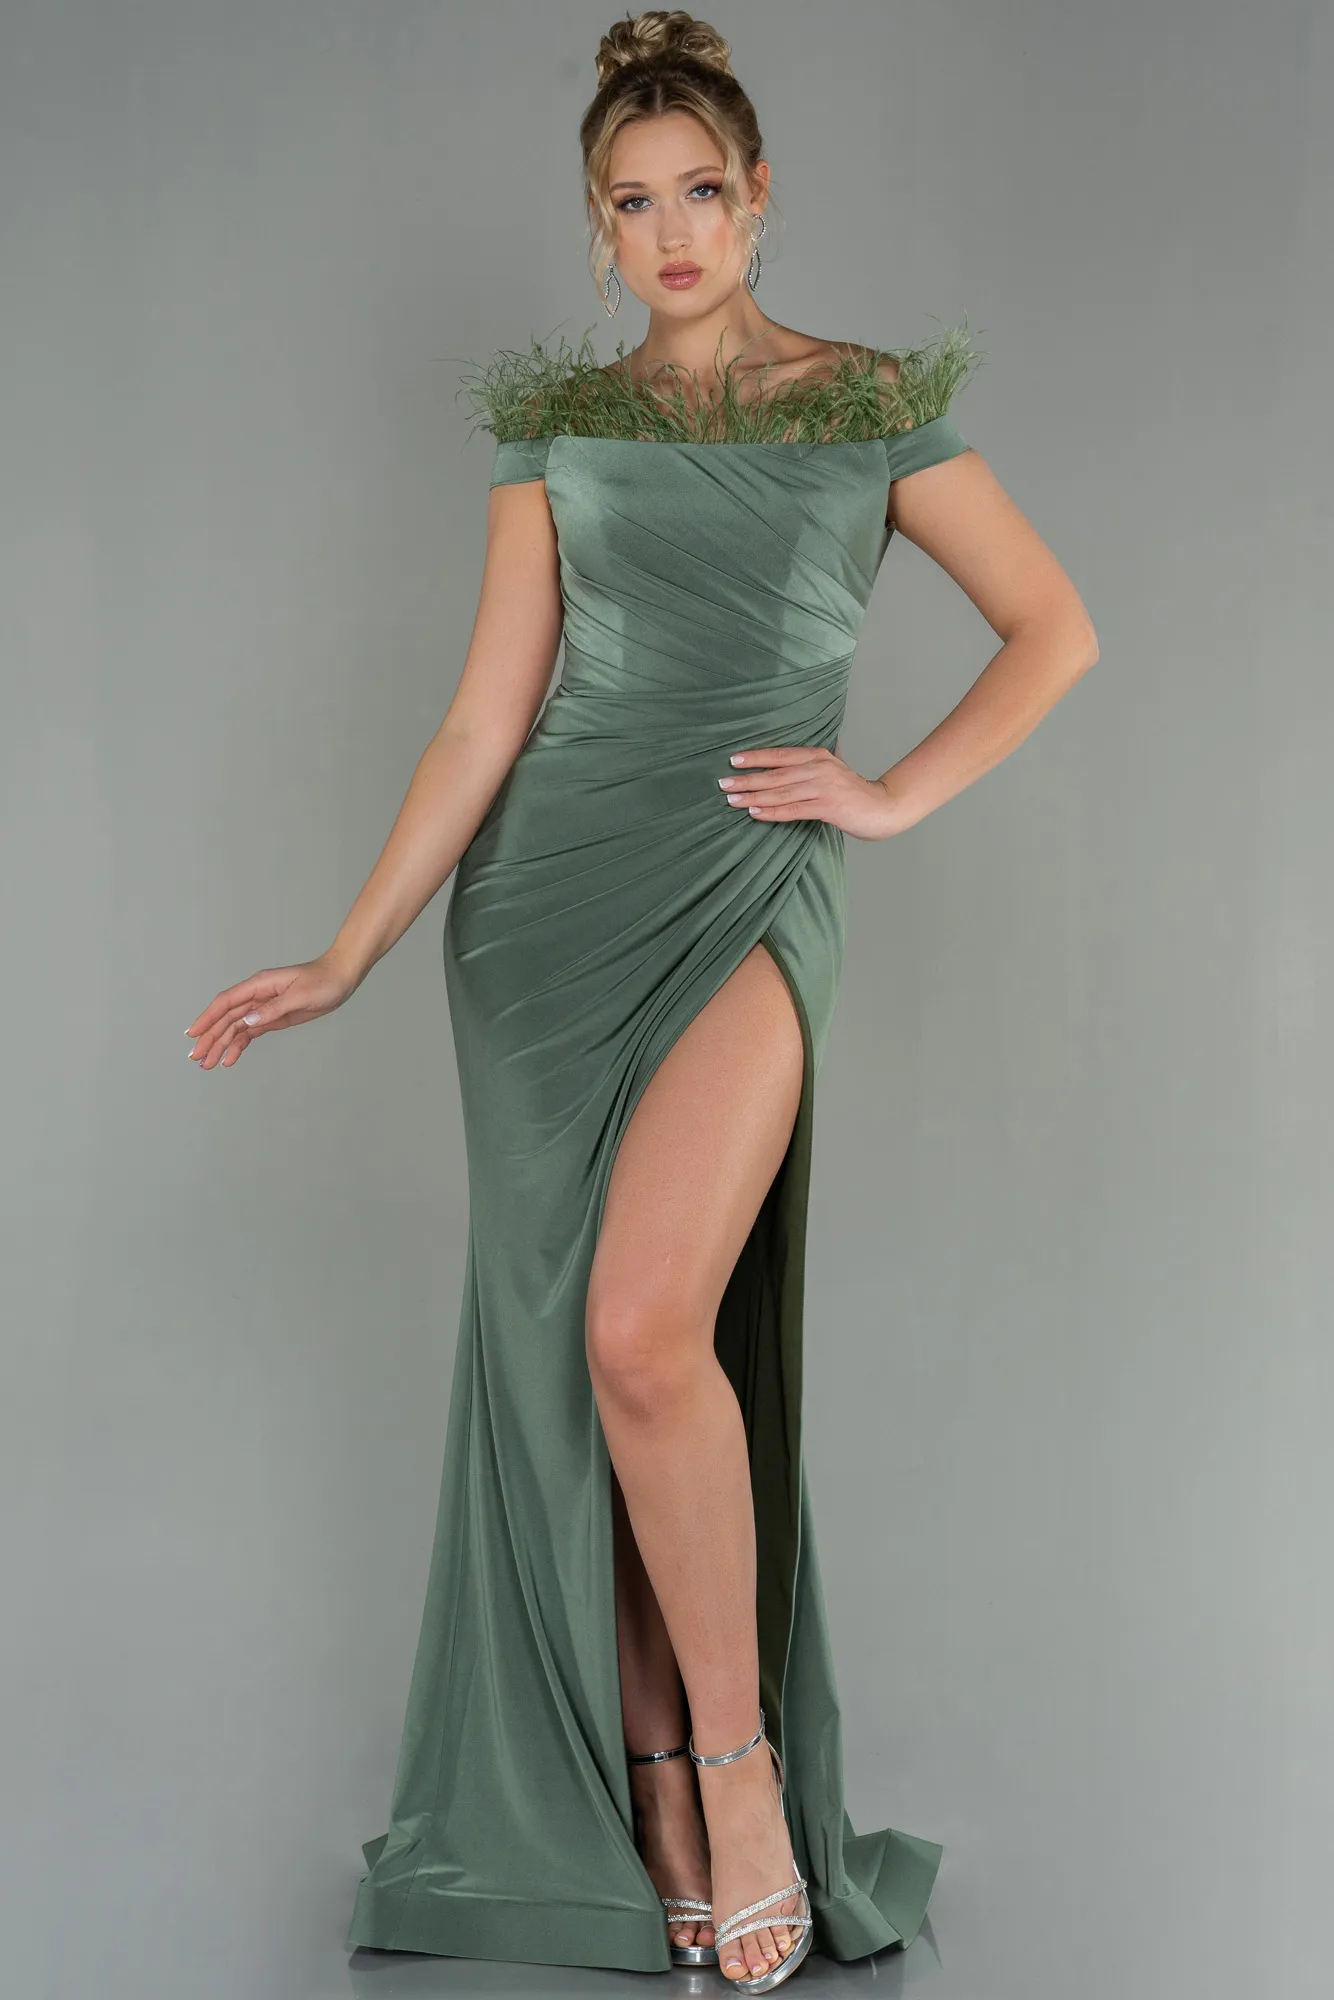 Olive Drab-Long Evening Dress ABU2906